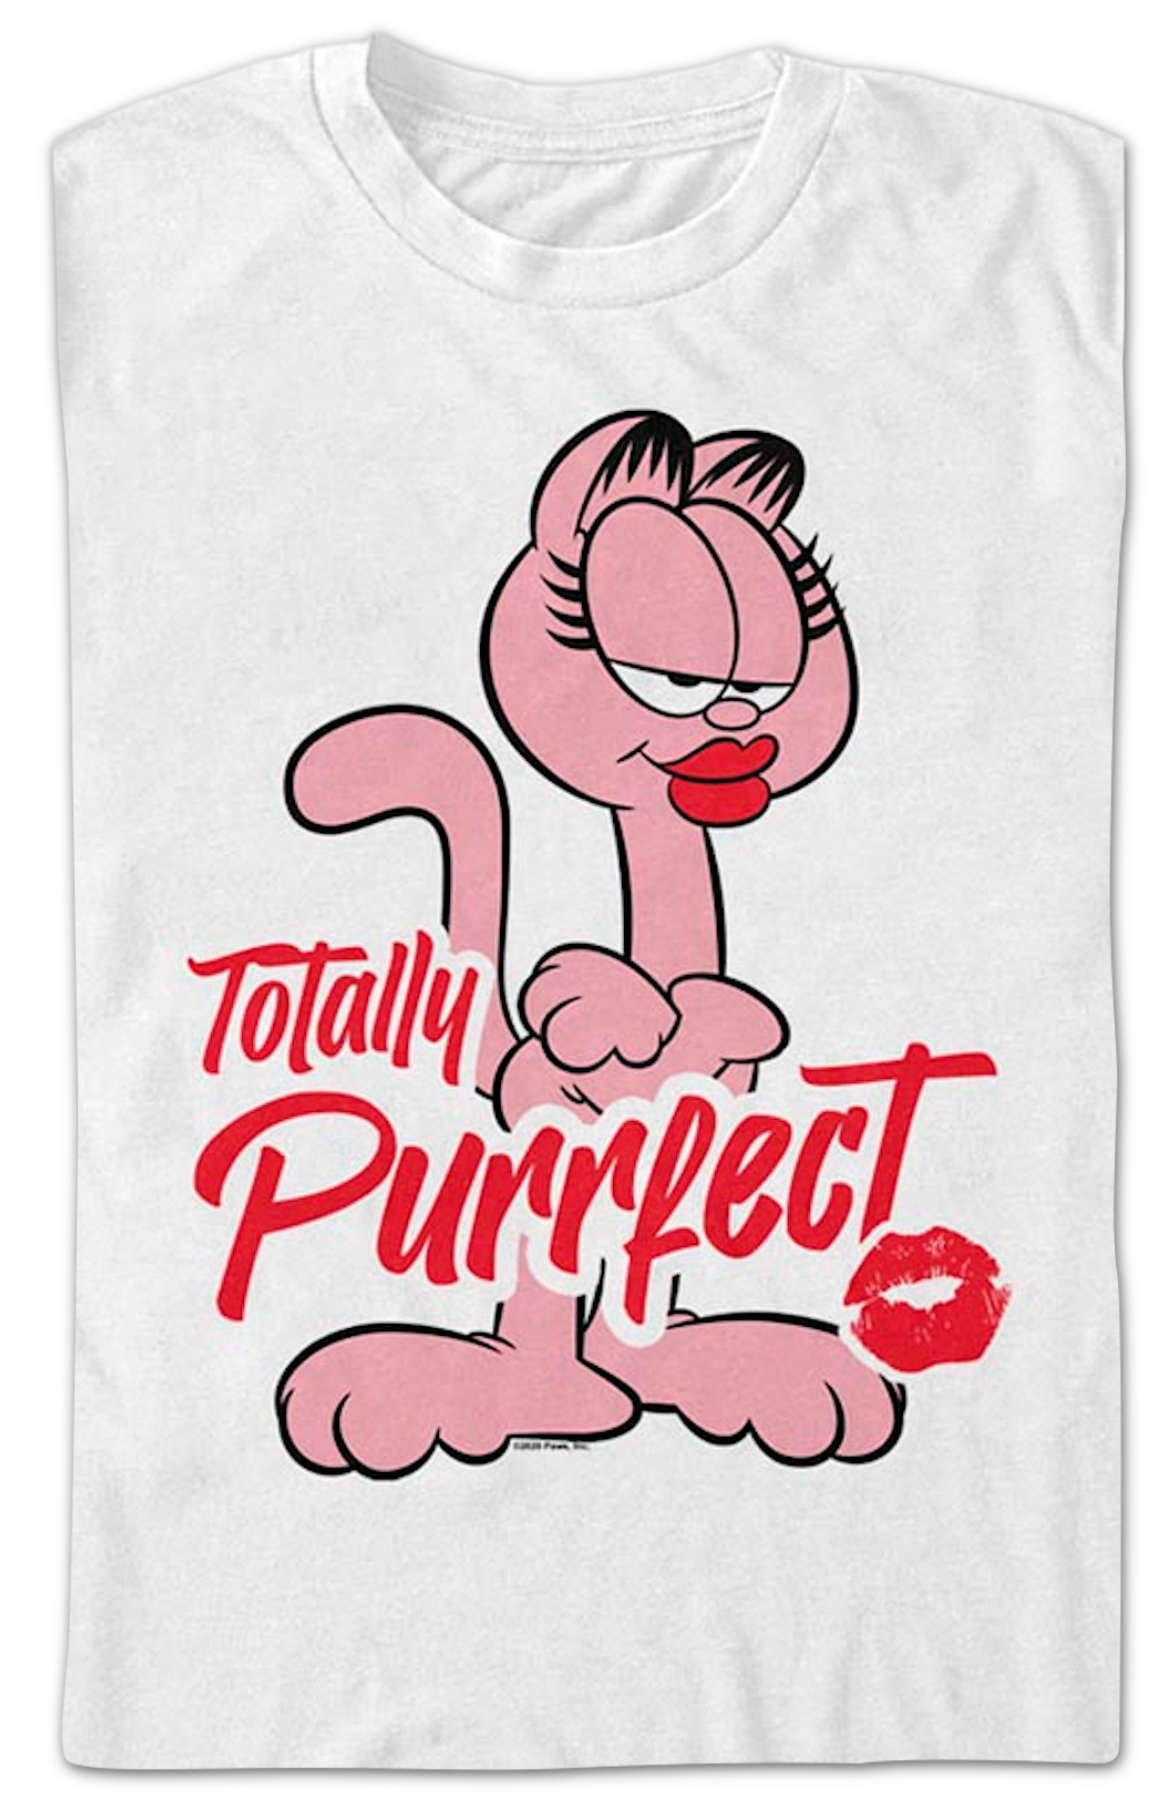 Totally Purrfect Garfield T-Shirt